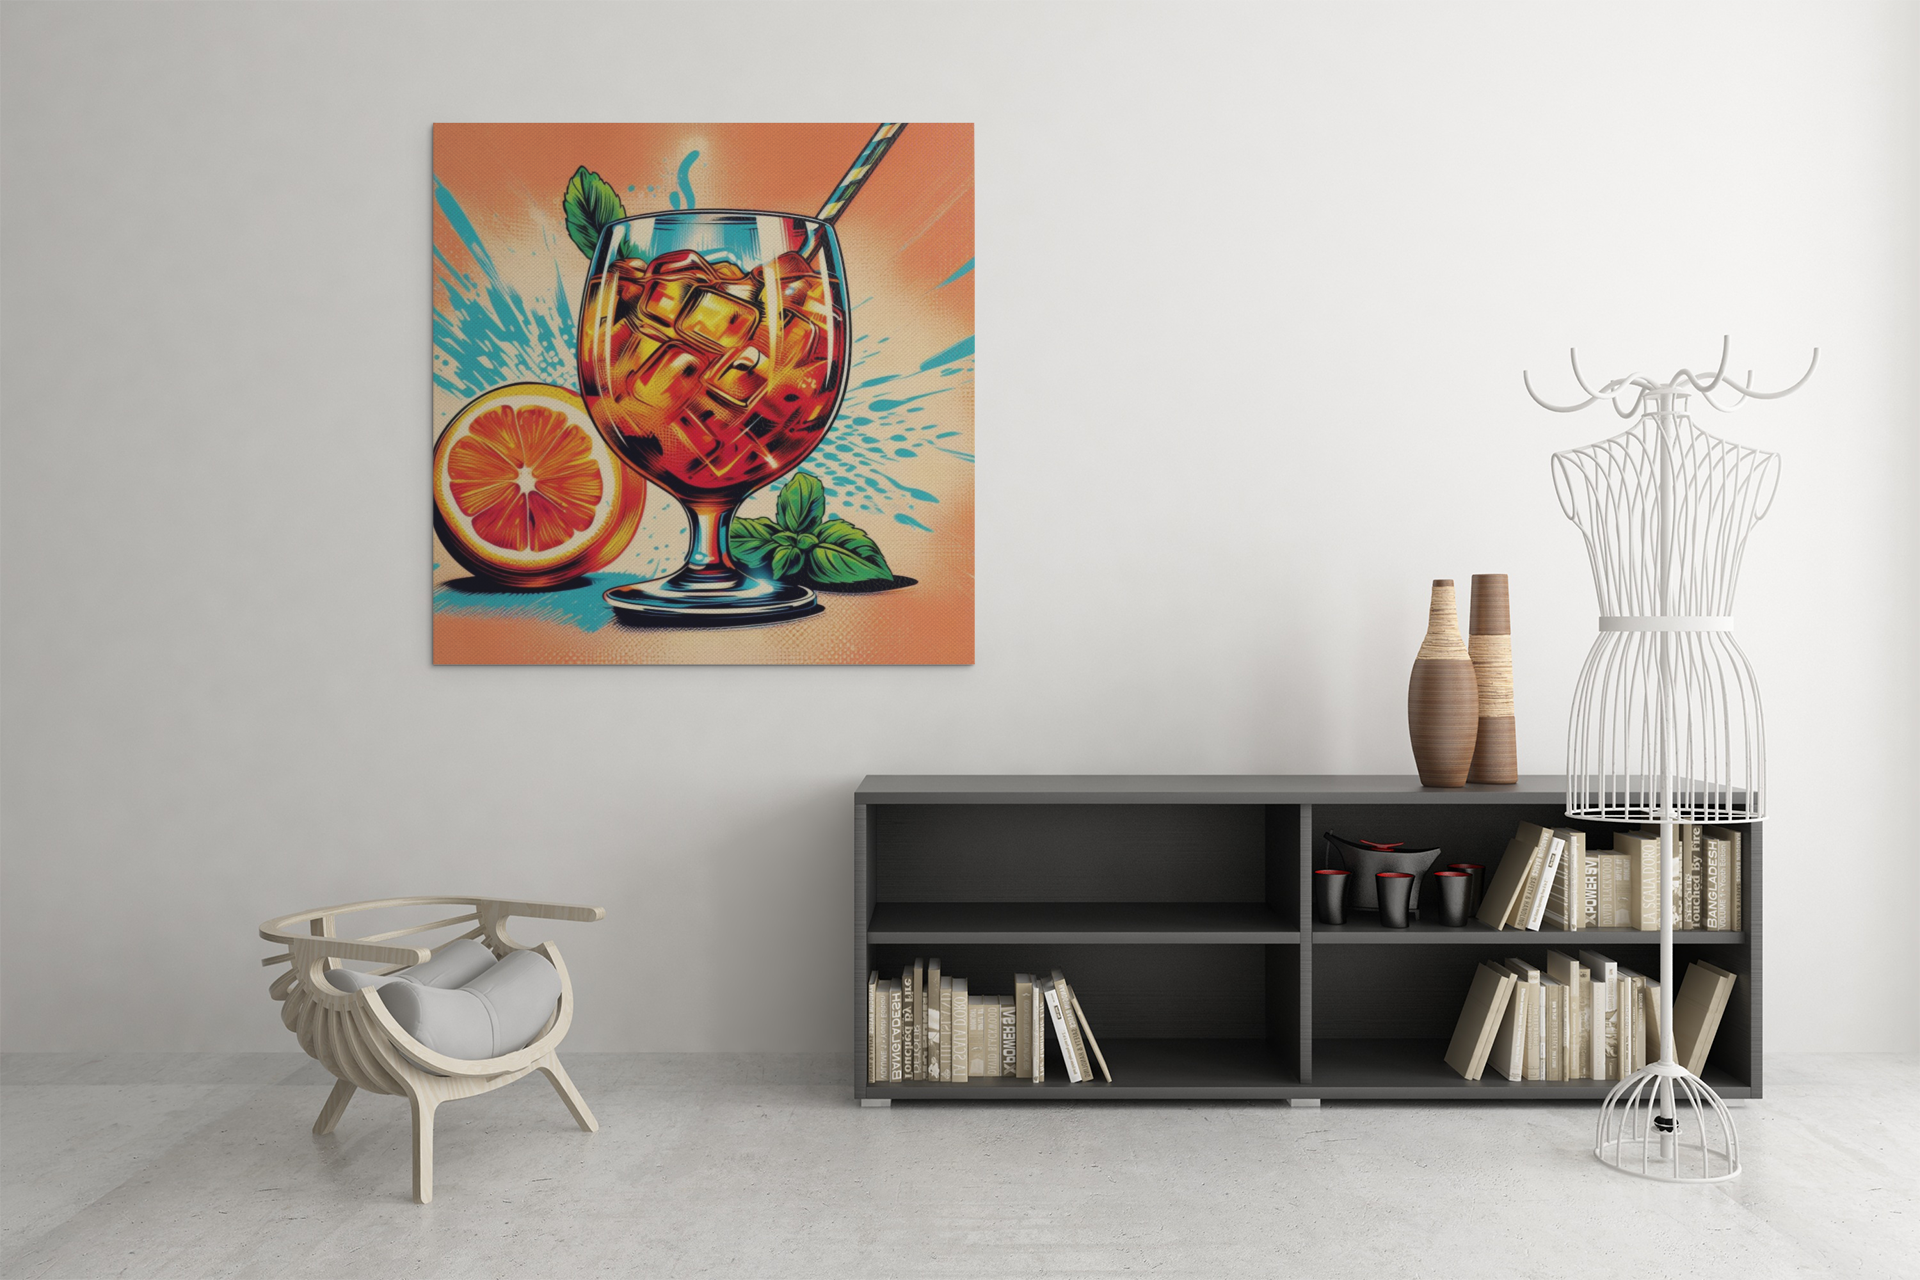 aperol spritz poster, cocktail poster, bar cart decor